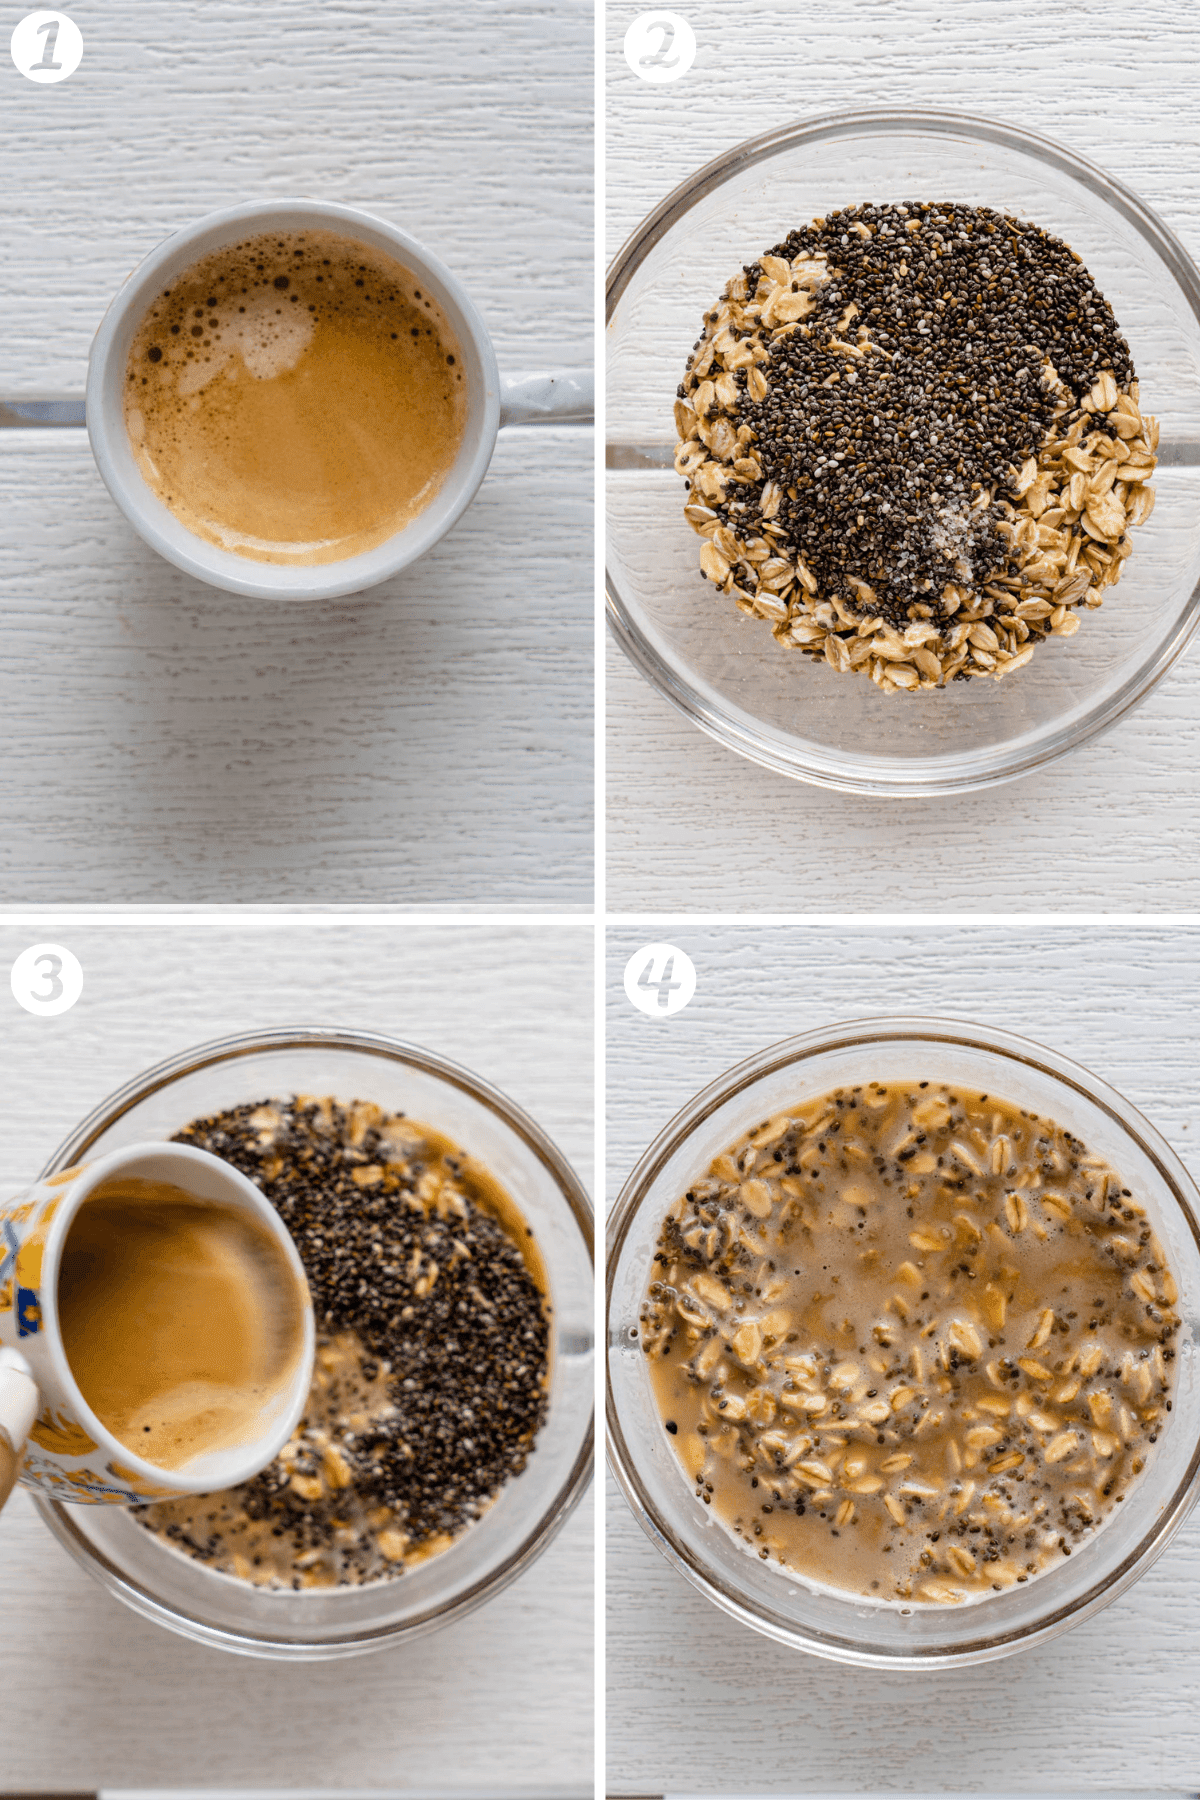 Steps on how to make the Tiramisu Overnight Oats mixture